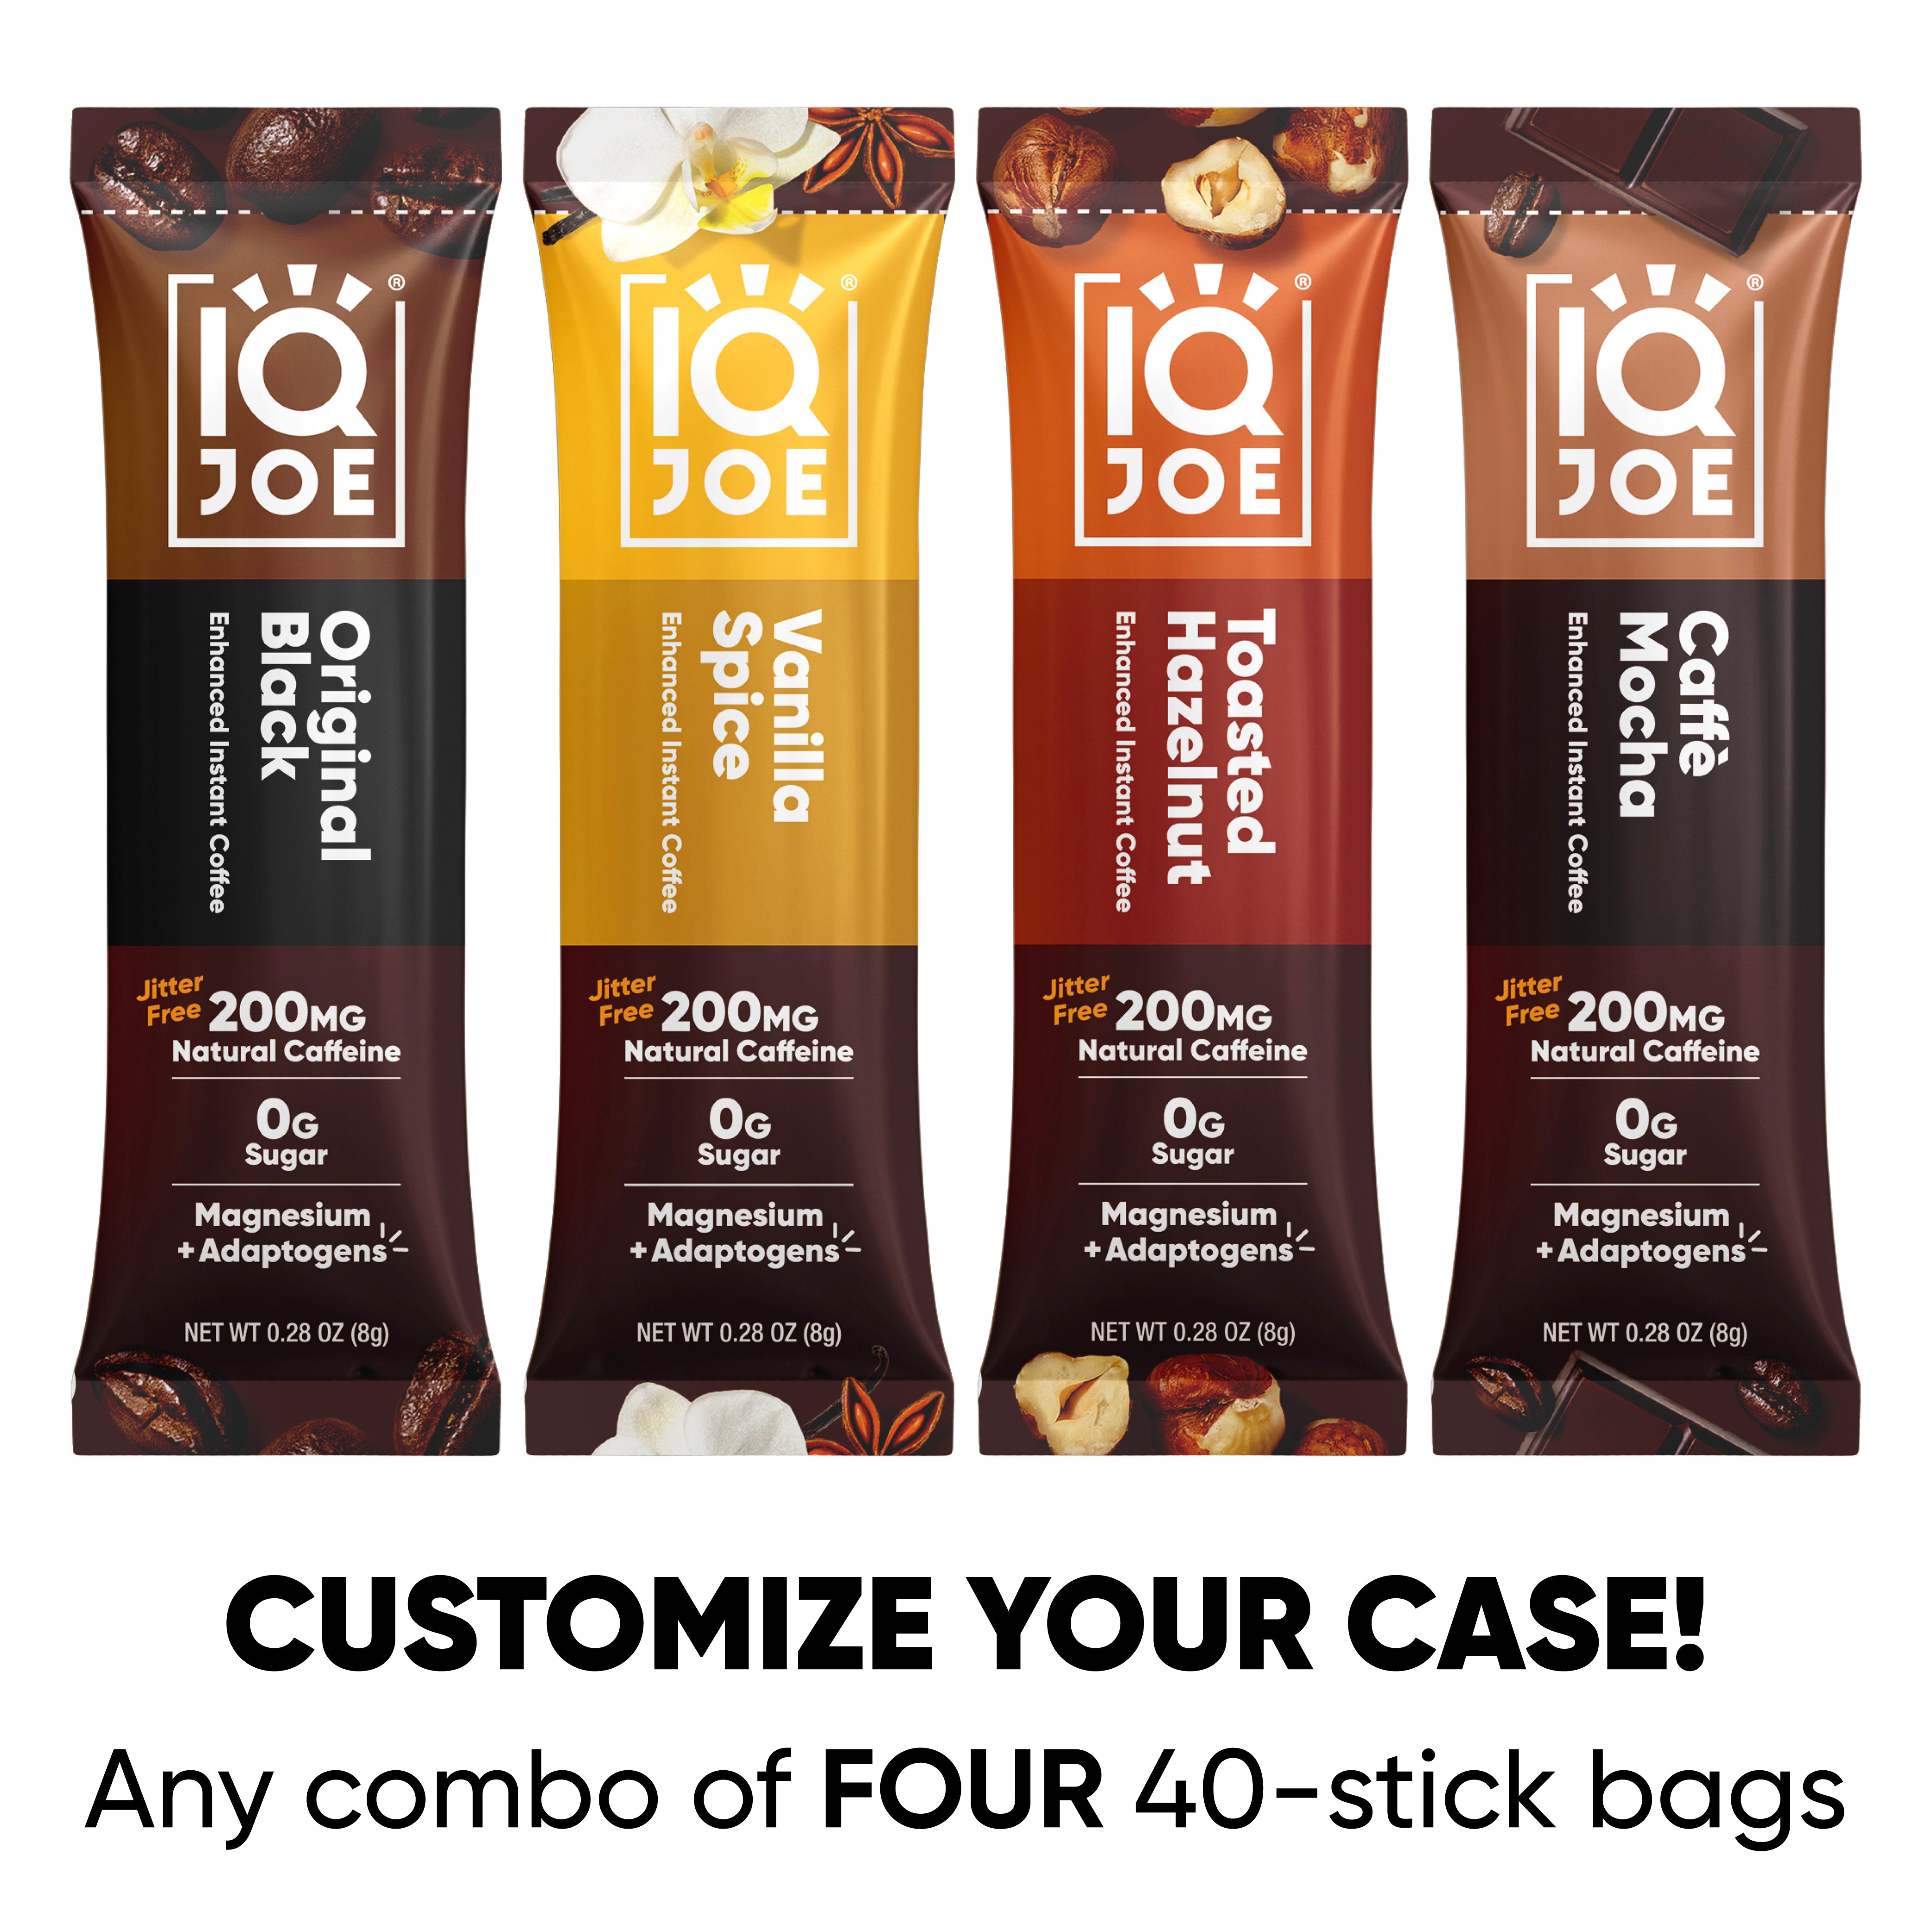 IQJOE - Customize Cases! (160 Sticks)